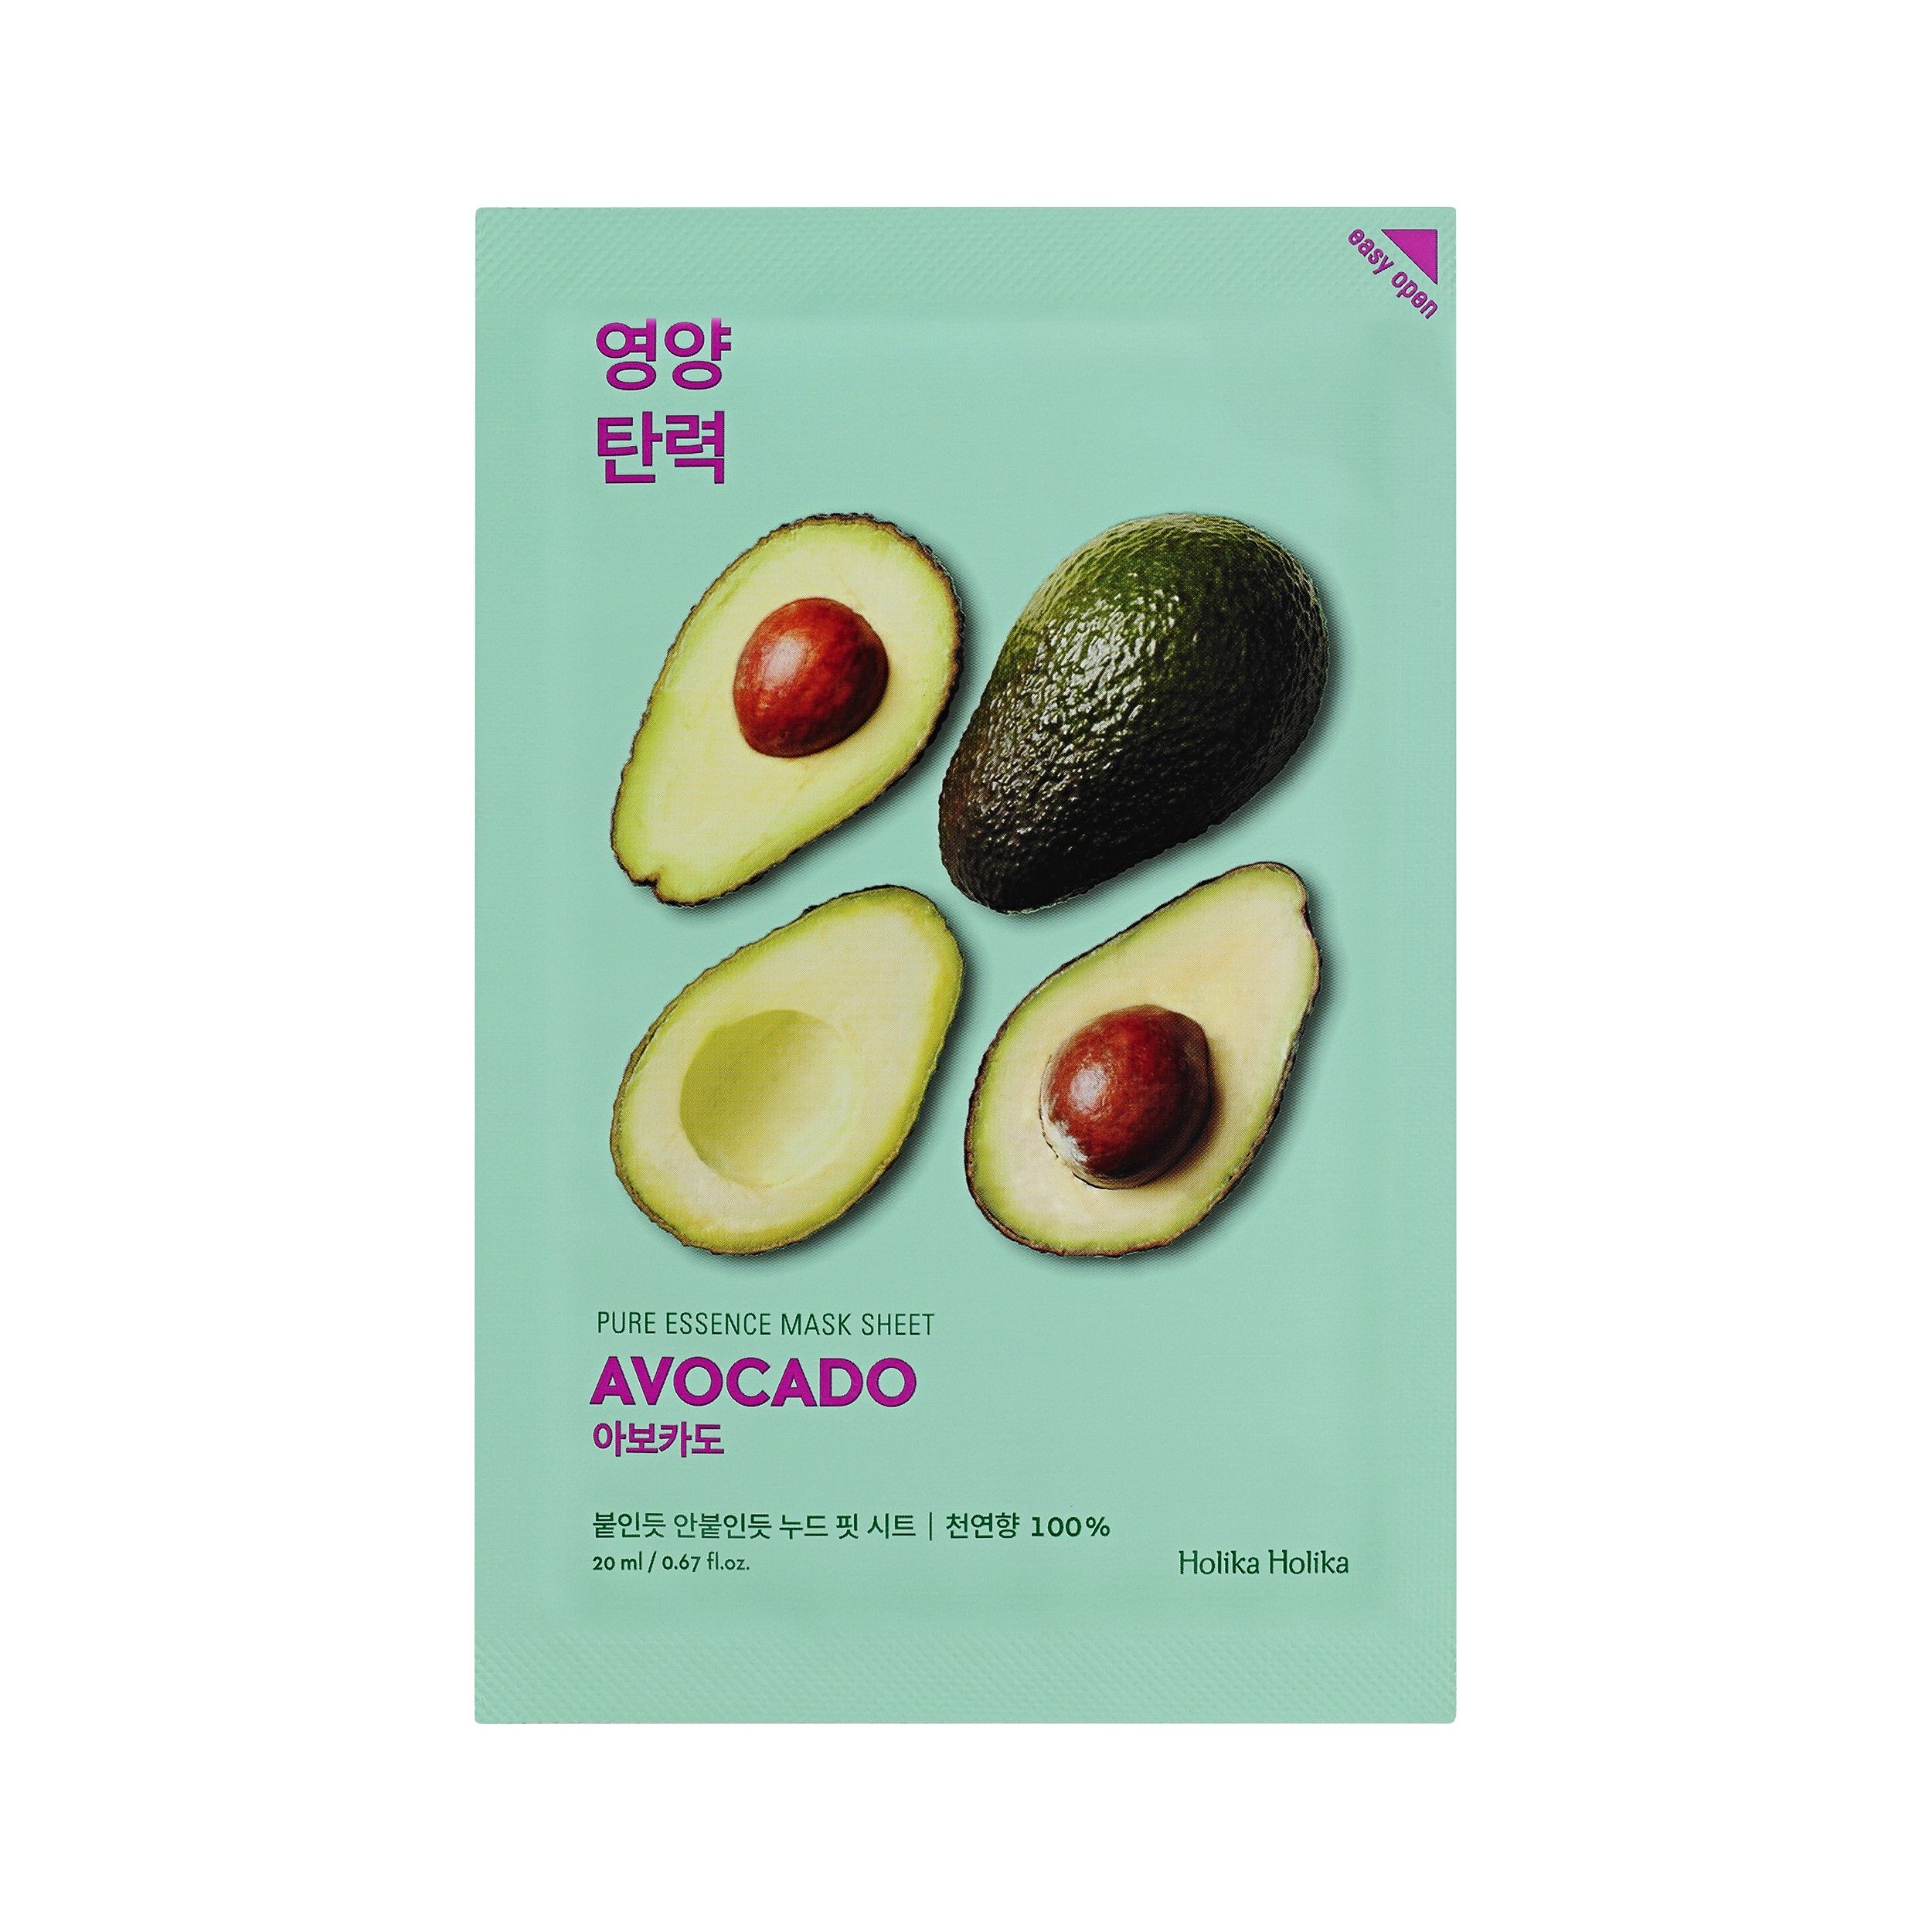 Pure Essence Mask Sheet - Avocado